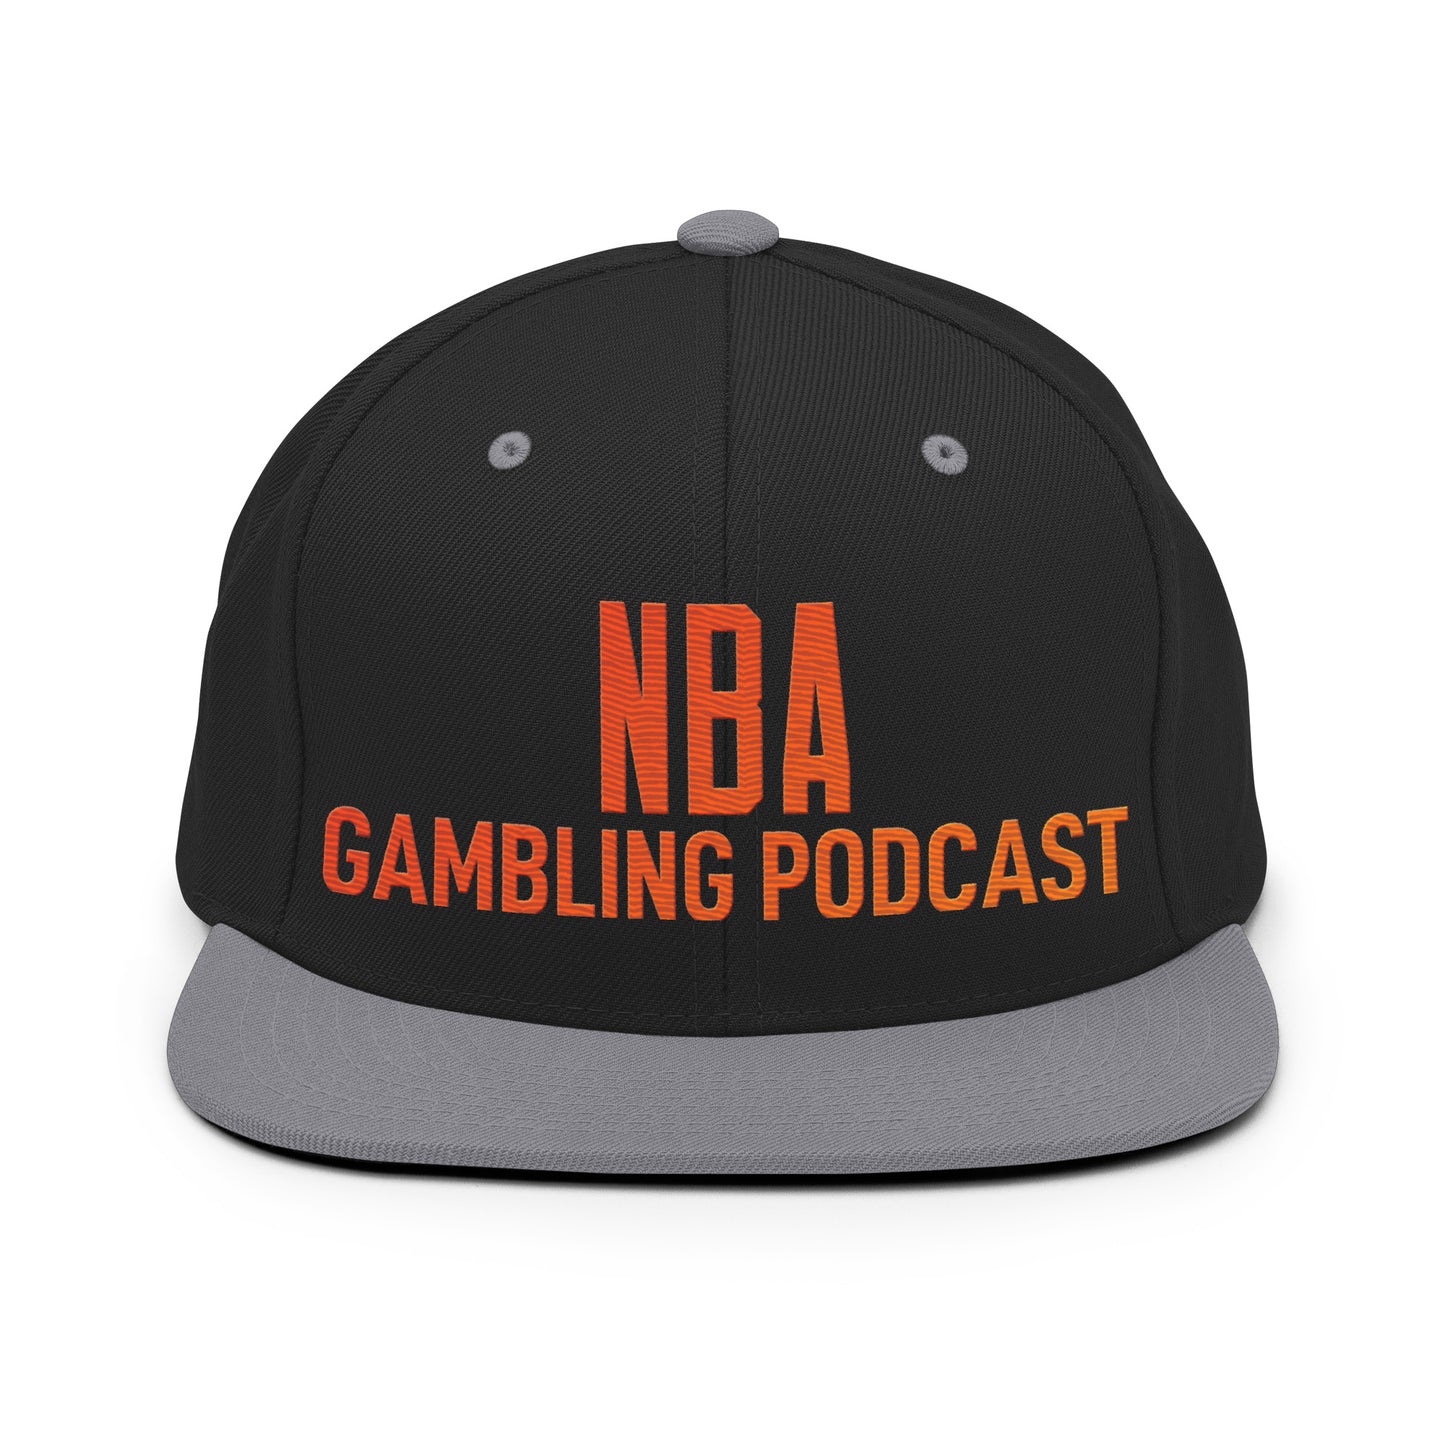 NBA Gambling Podcast - Snapback Hat